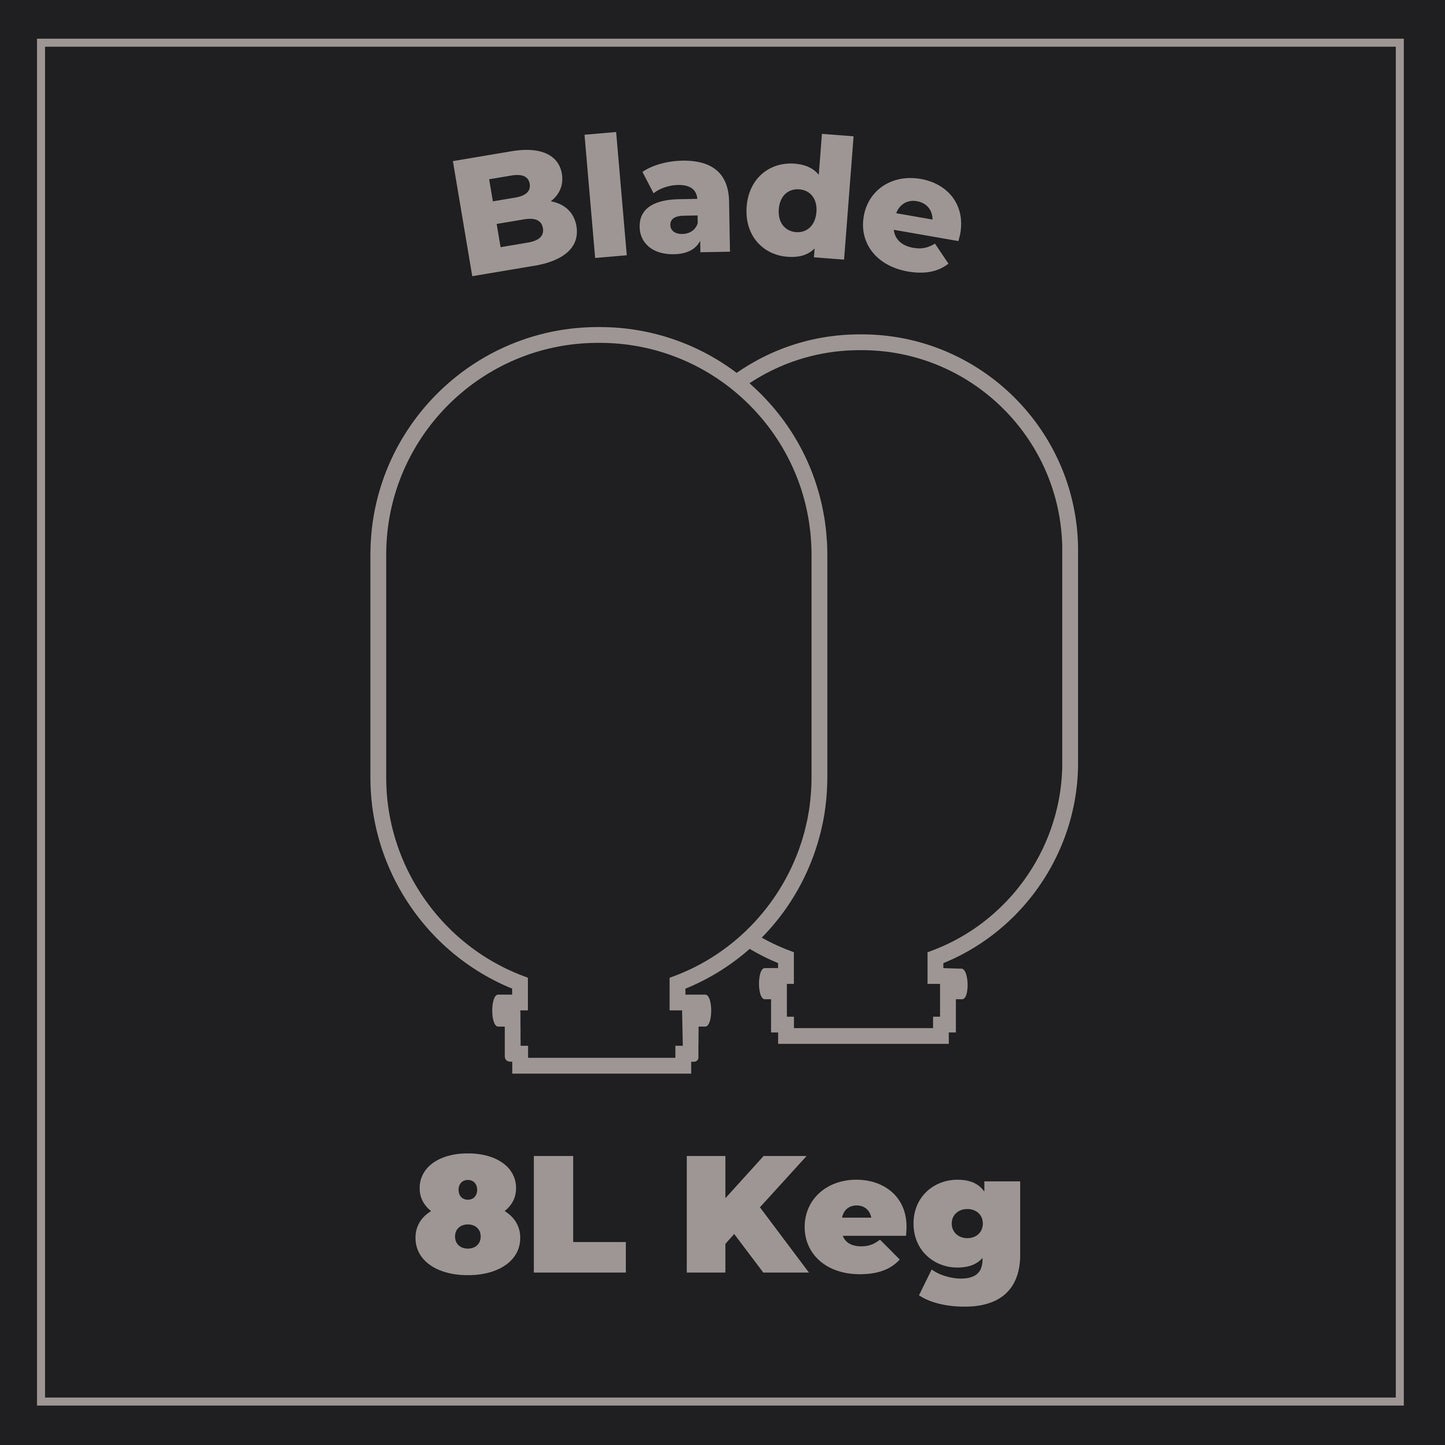 Puntigamer Blade Keg – Lager – 5.2% ABV - 8L Blade Keg